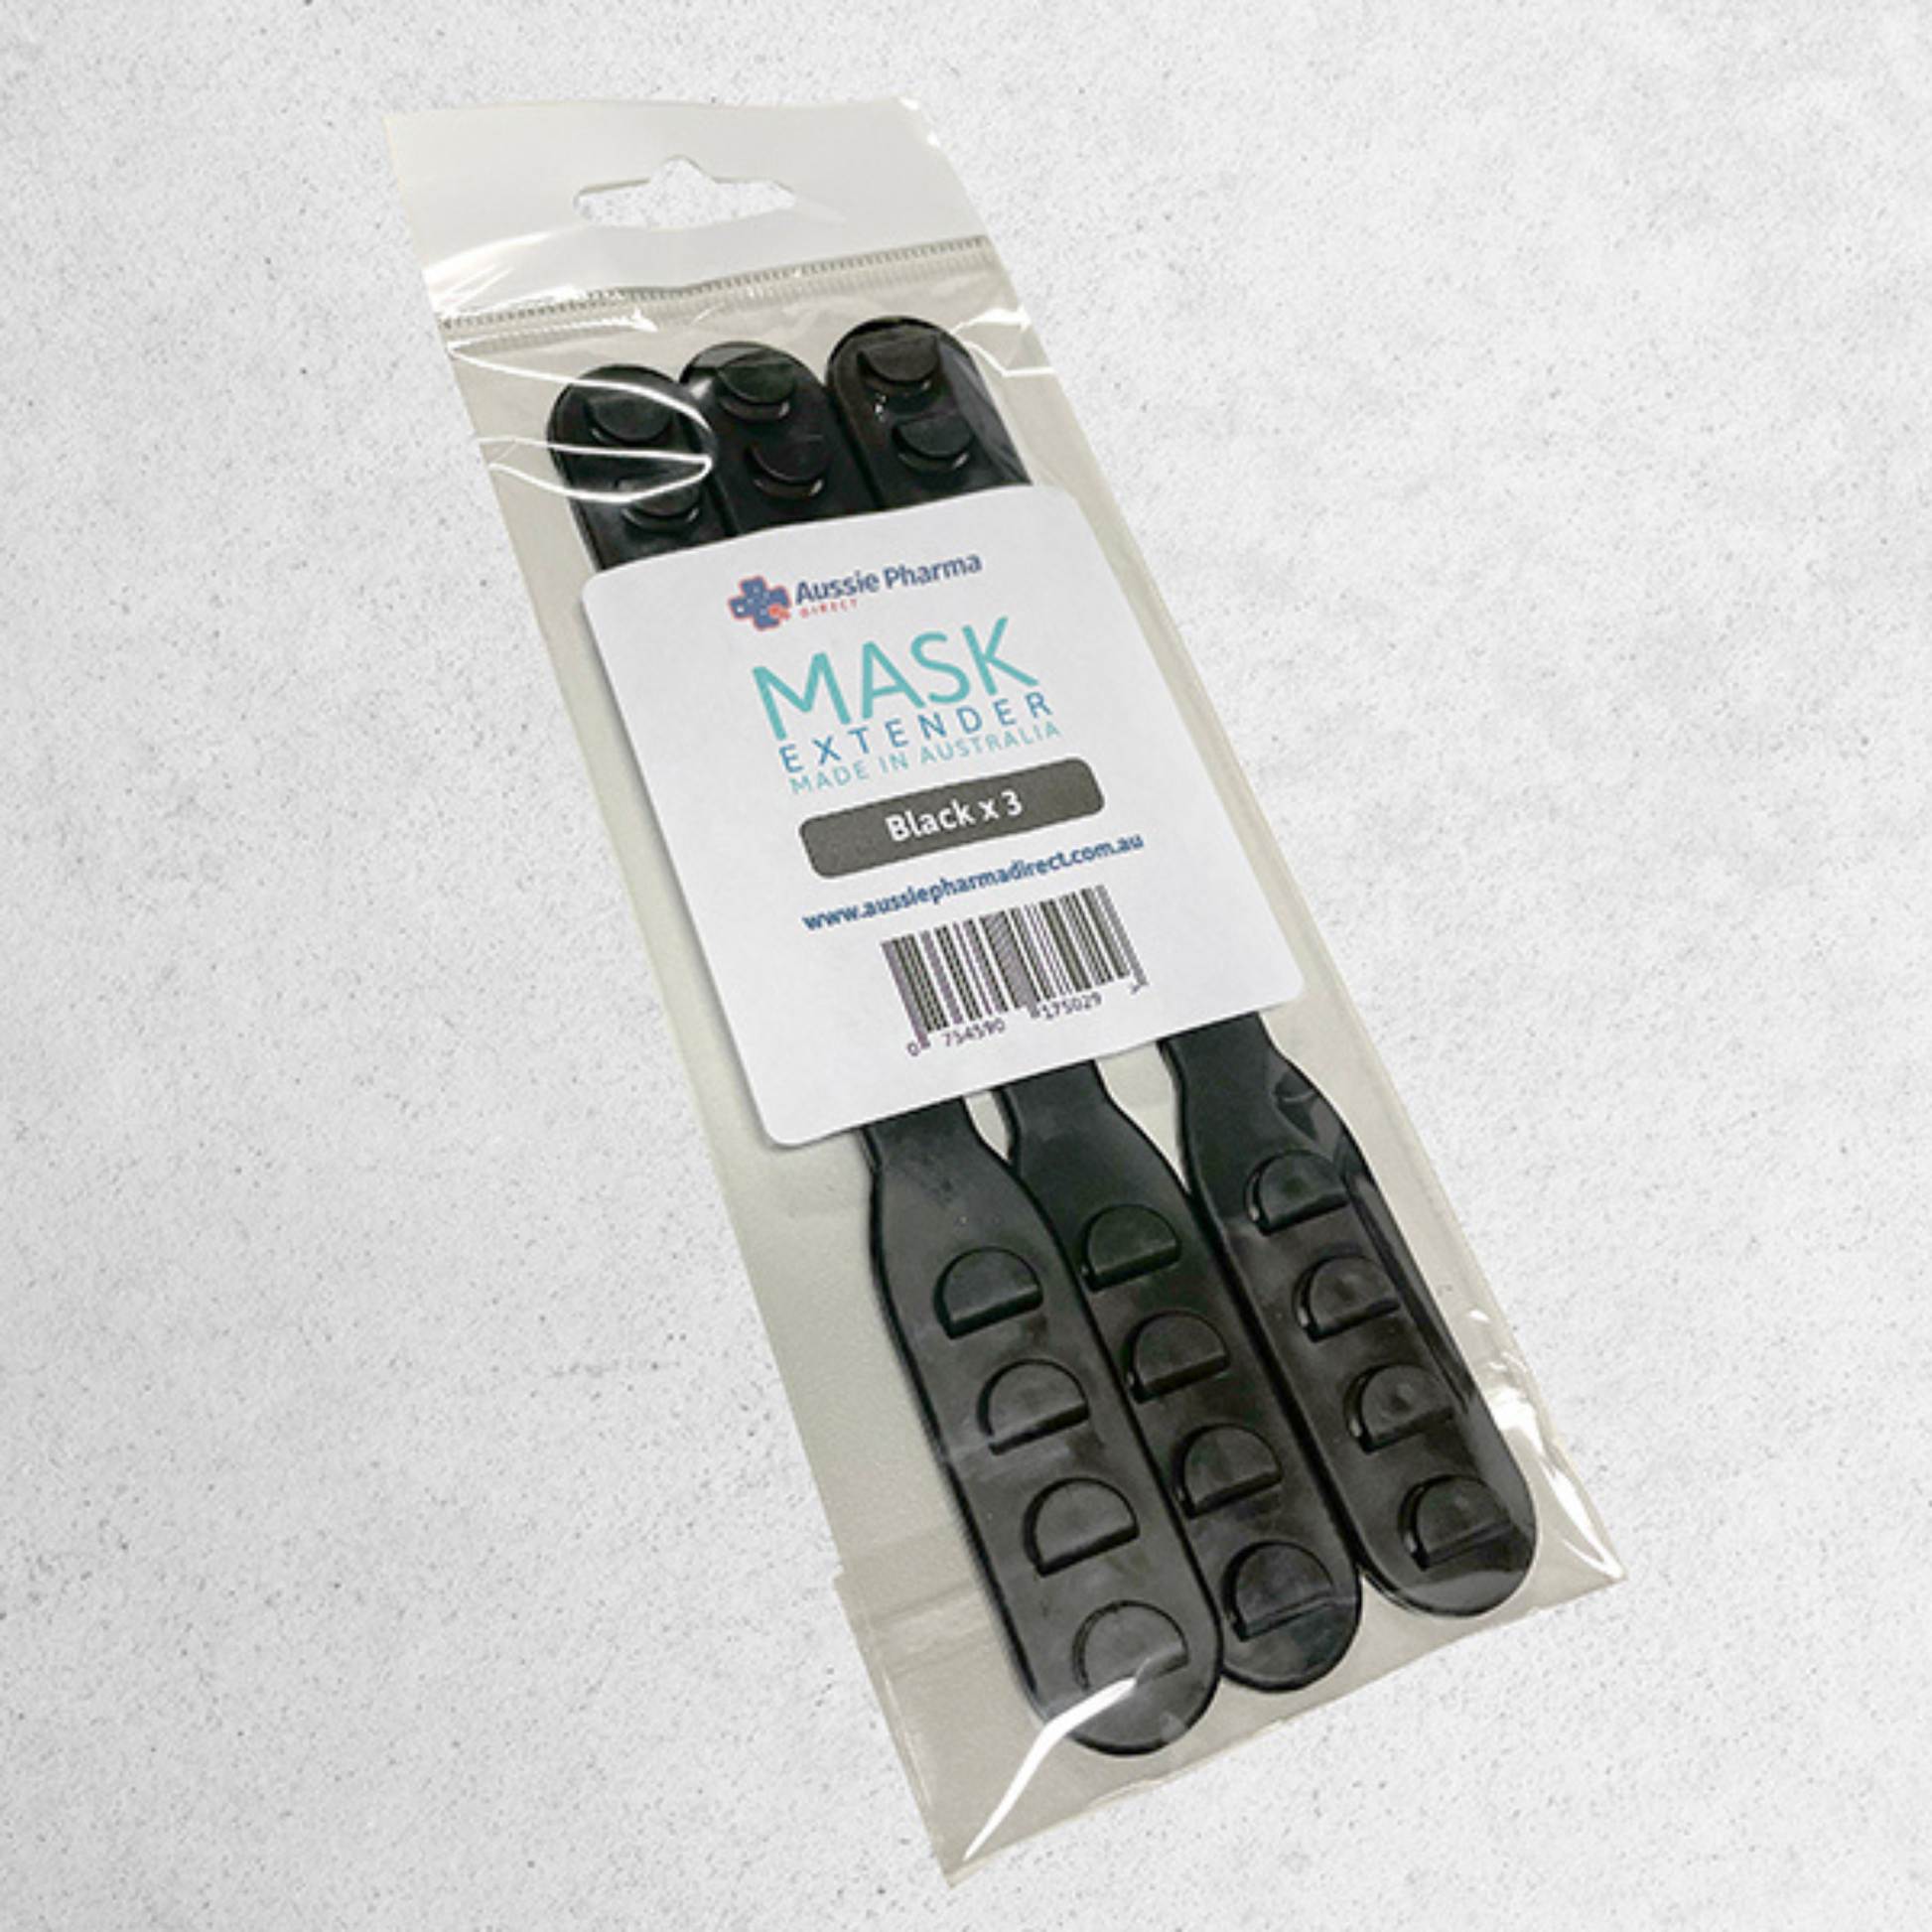 P2 Face Mask Extenders & Ear Savers Black (3 pack)